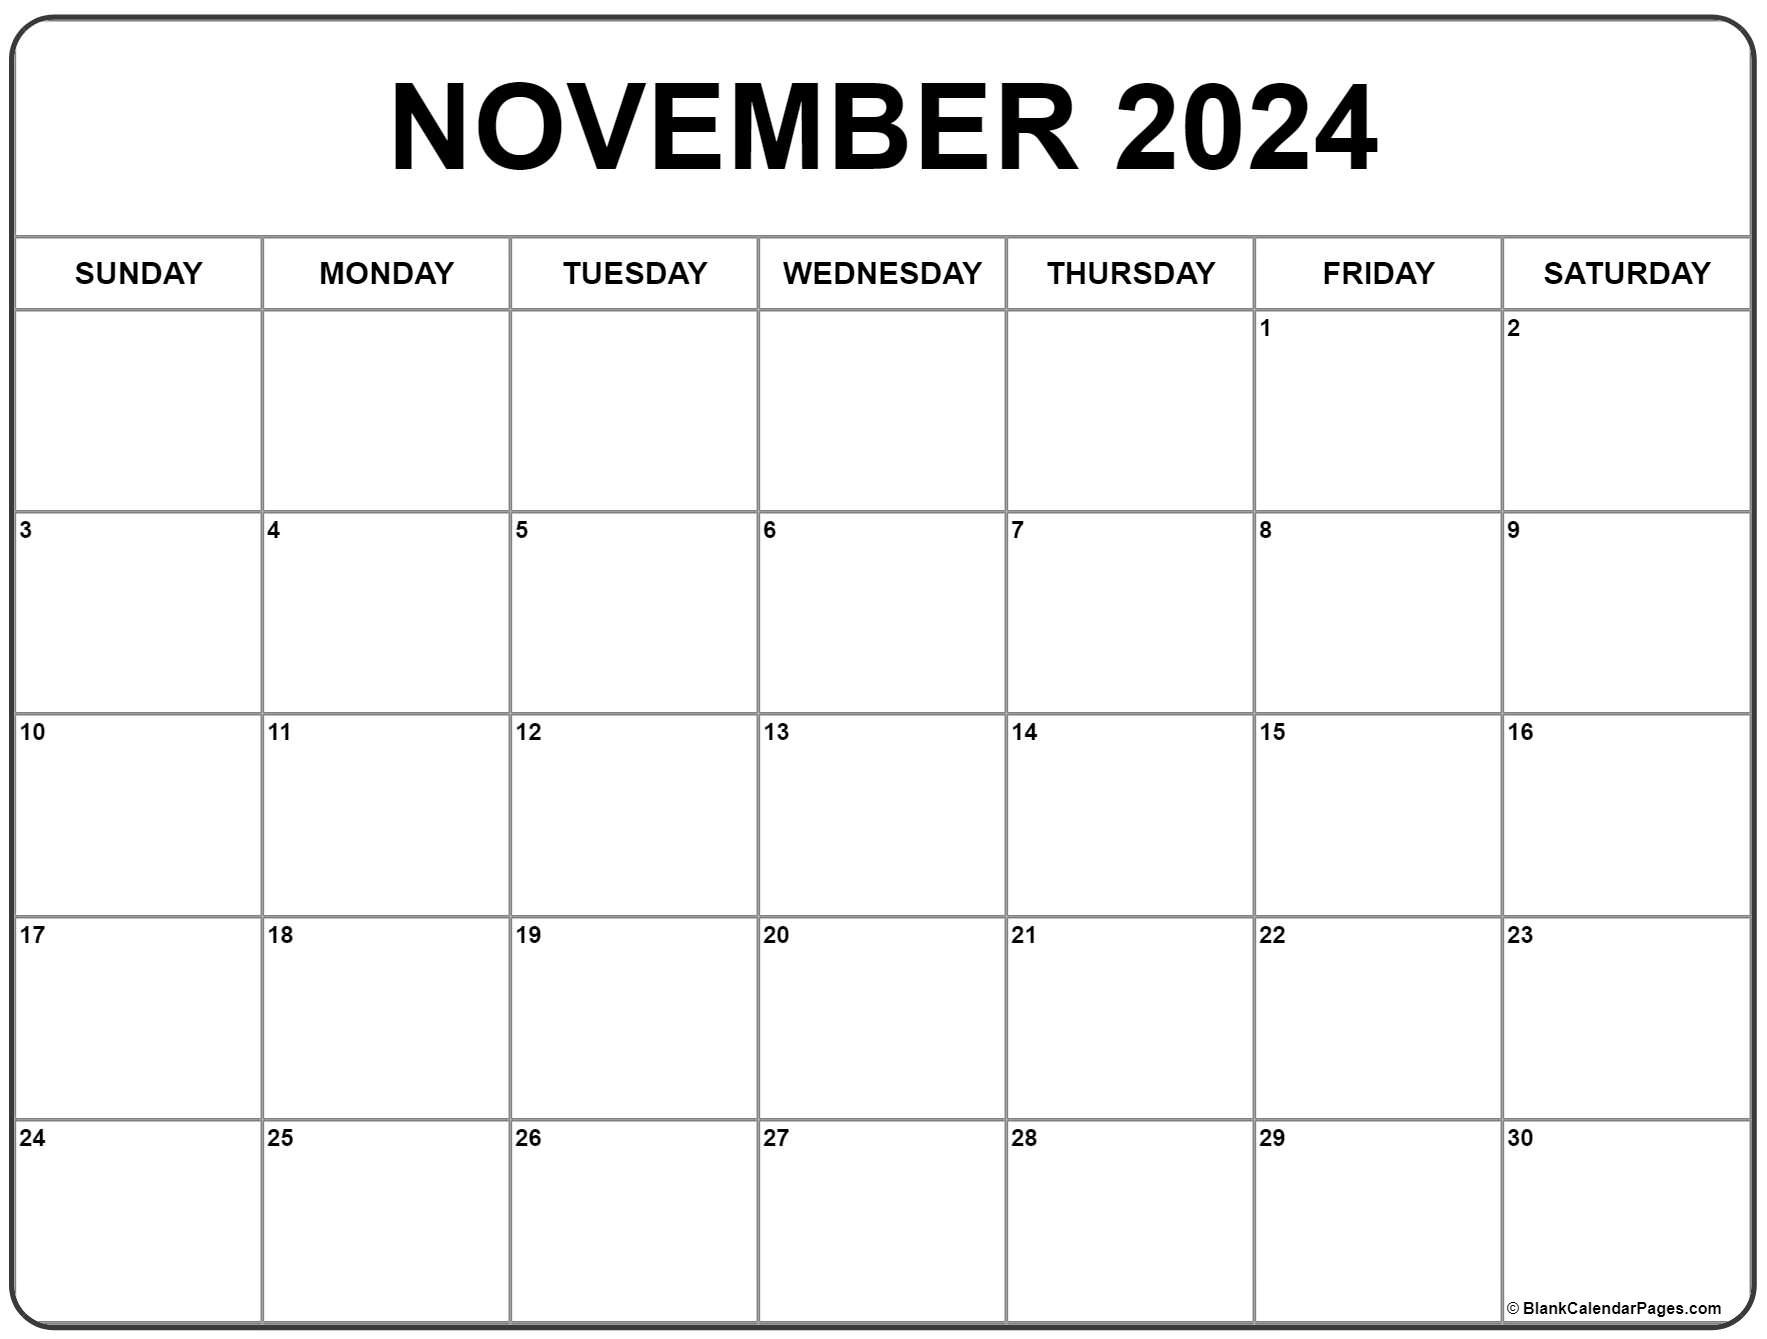 November 2024 Calendar | Free Printable Calendar | November 2024 Calendar Printable Free